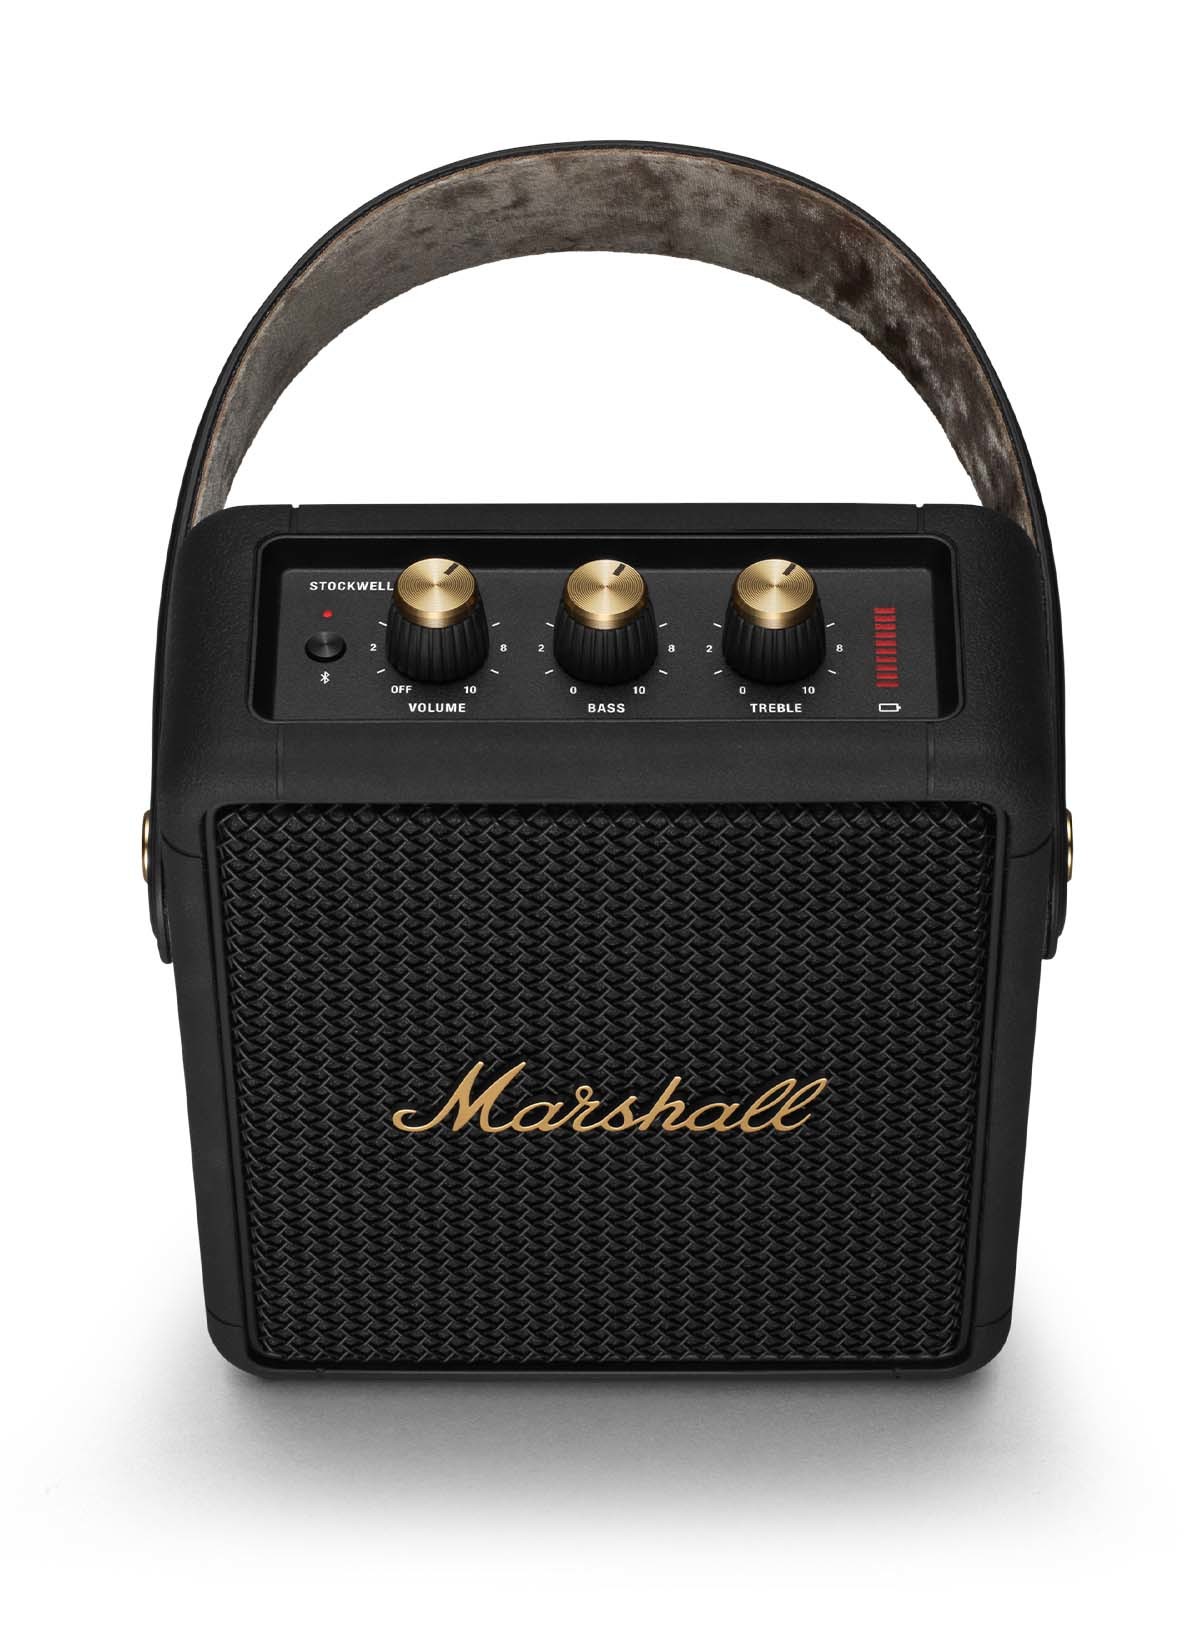 Marshall Stockwell II Tragbarer Bluetooth Lautsprecher Black & Brass